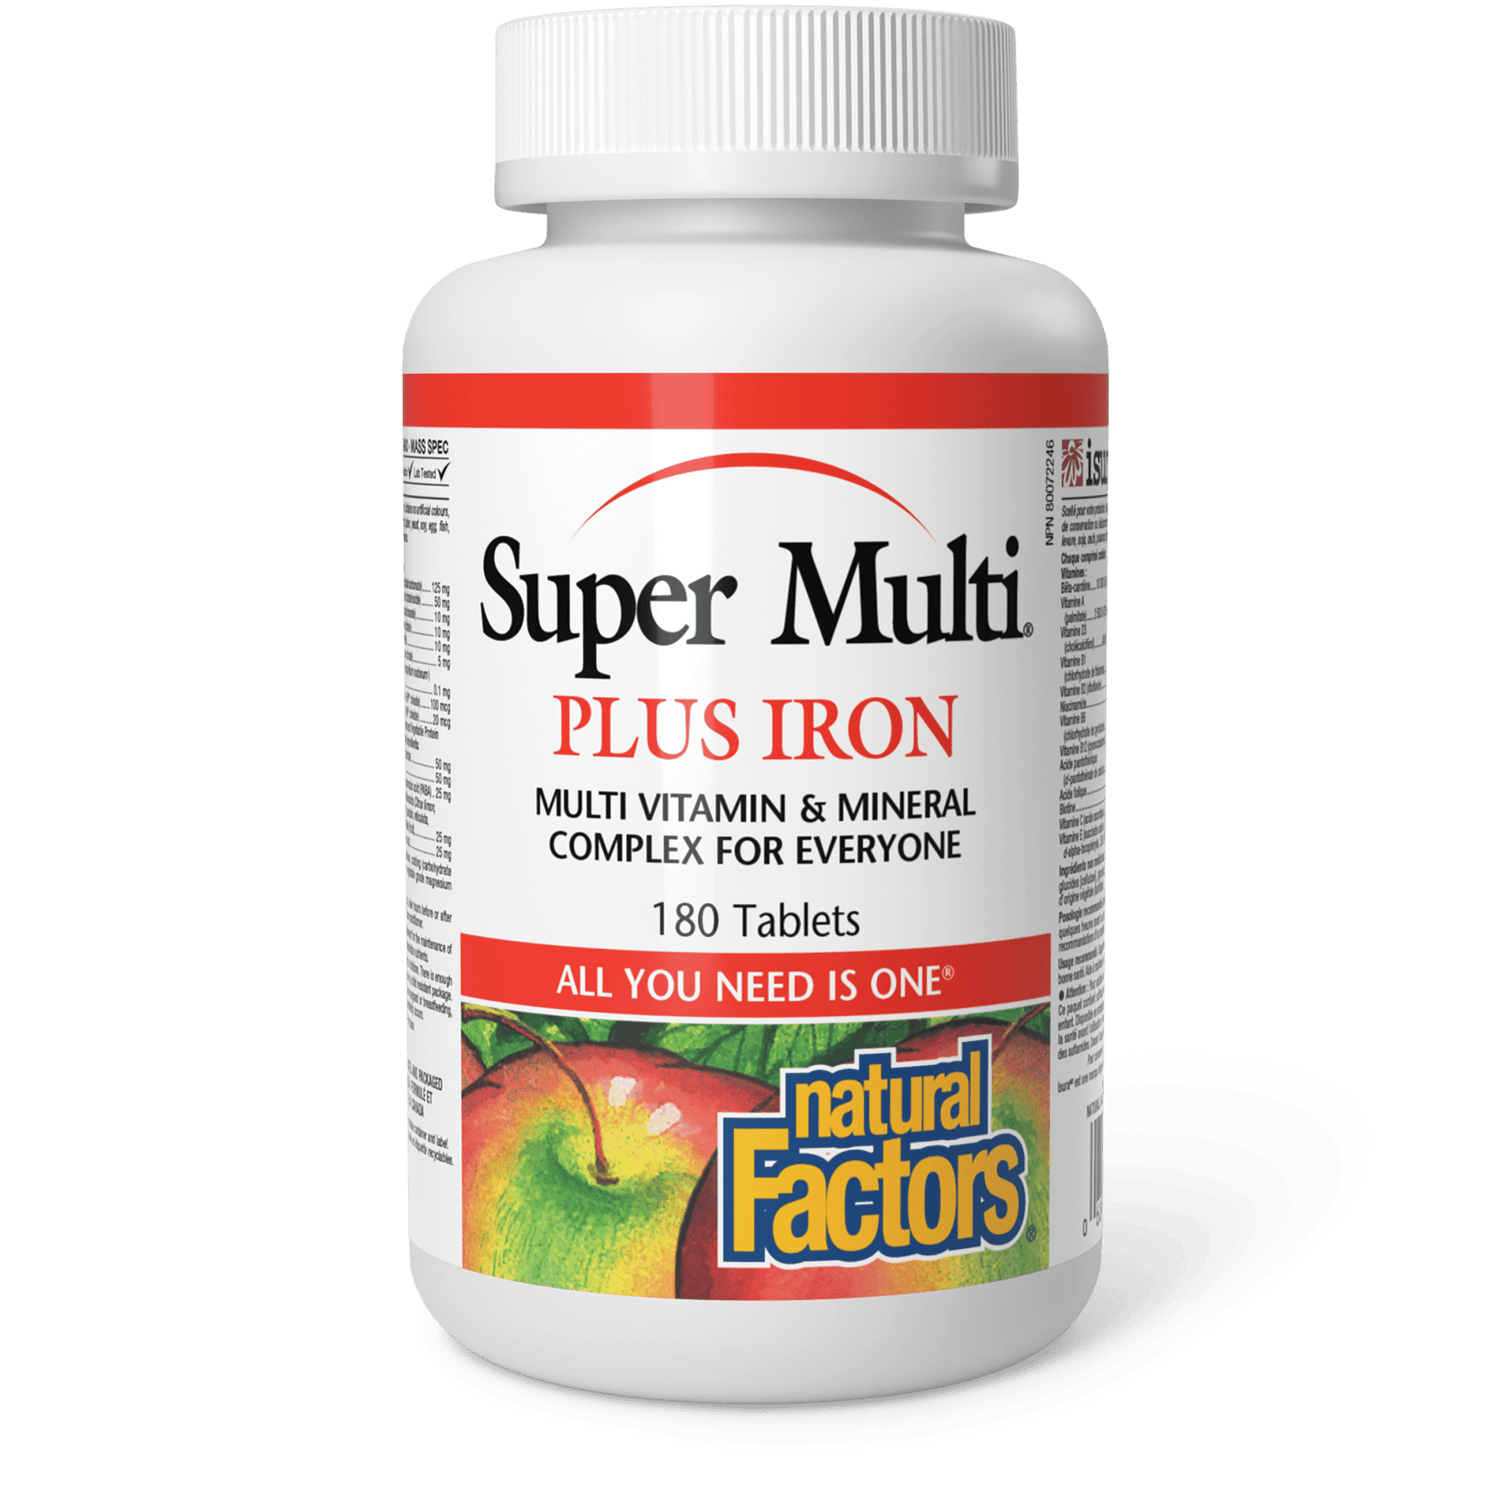 Super Multi Plus Iron, Natural Factors|v|image|1512